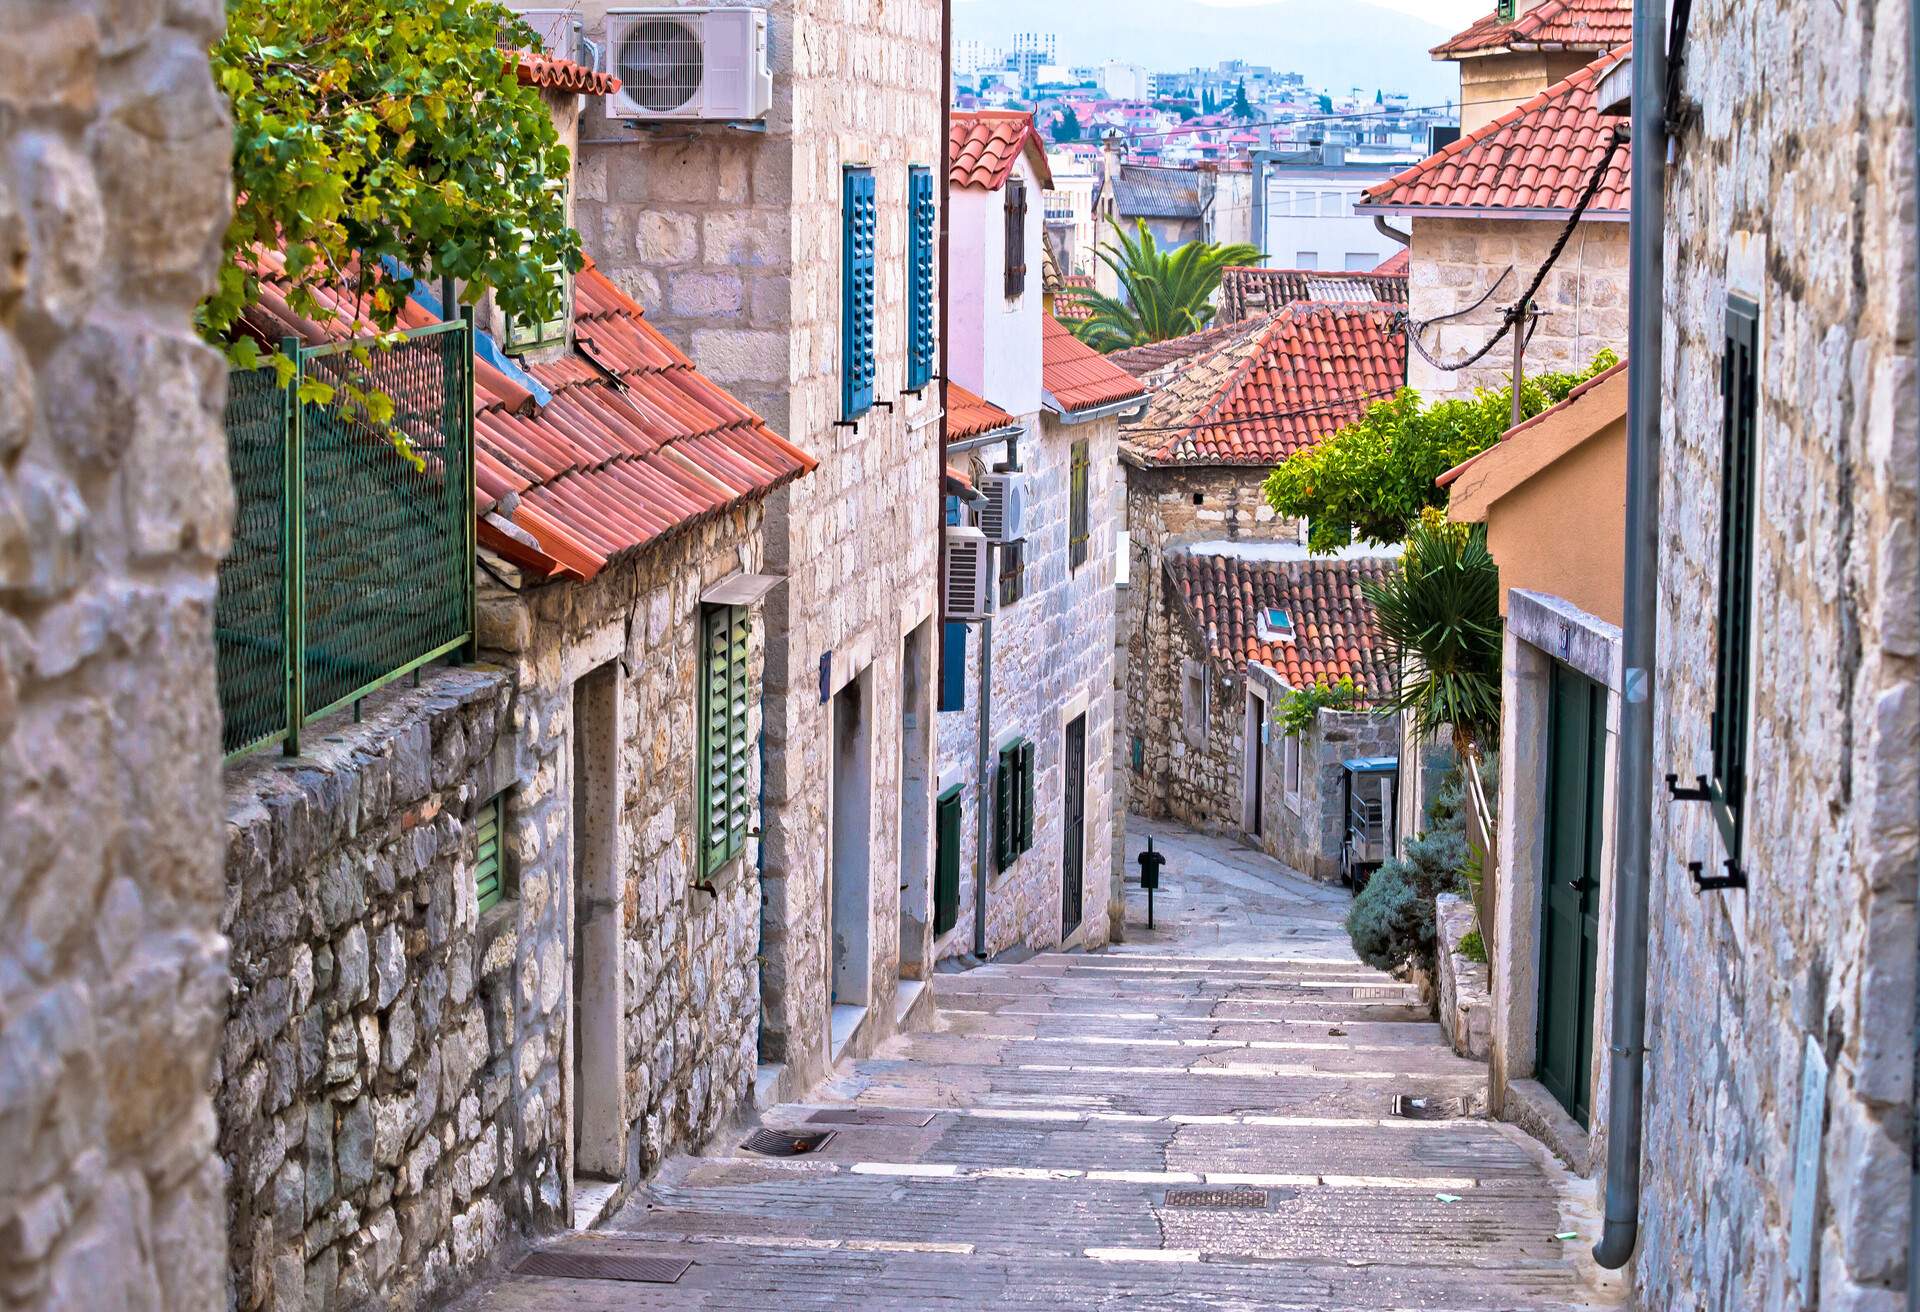 Old stone street of Split historic city, Dalmatia, Croatia